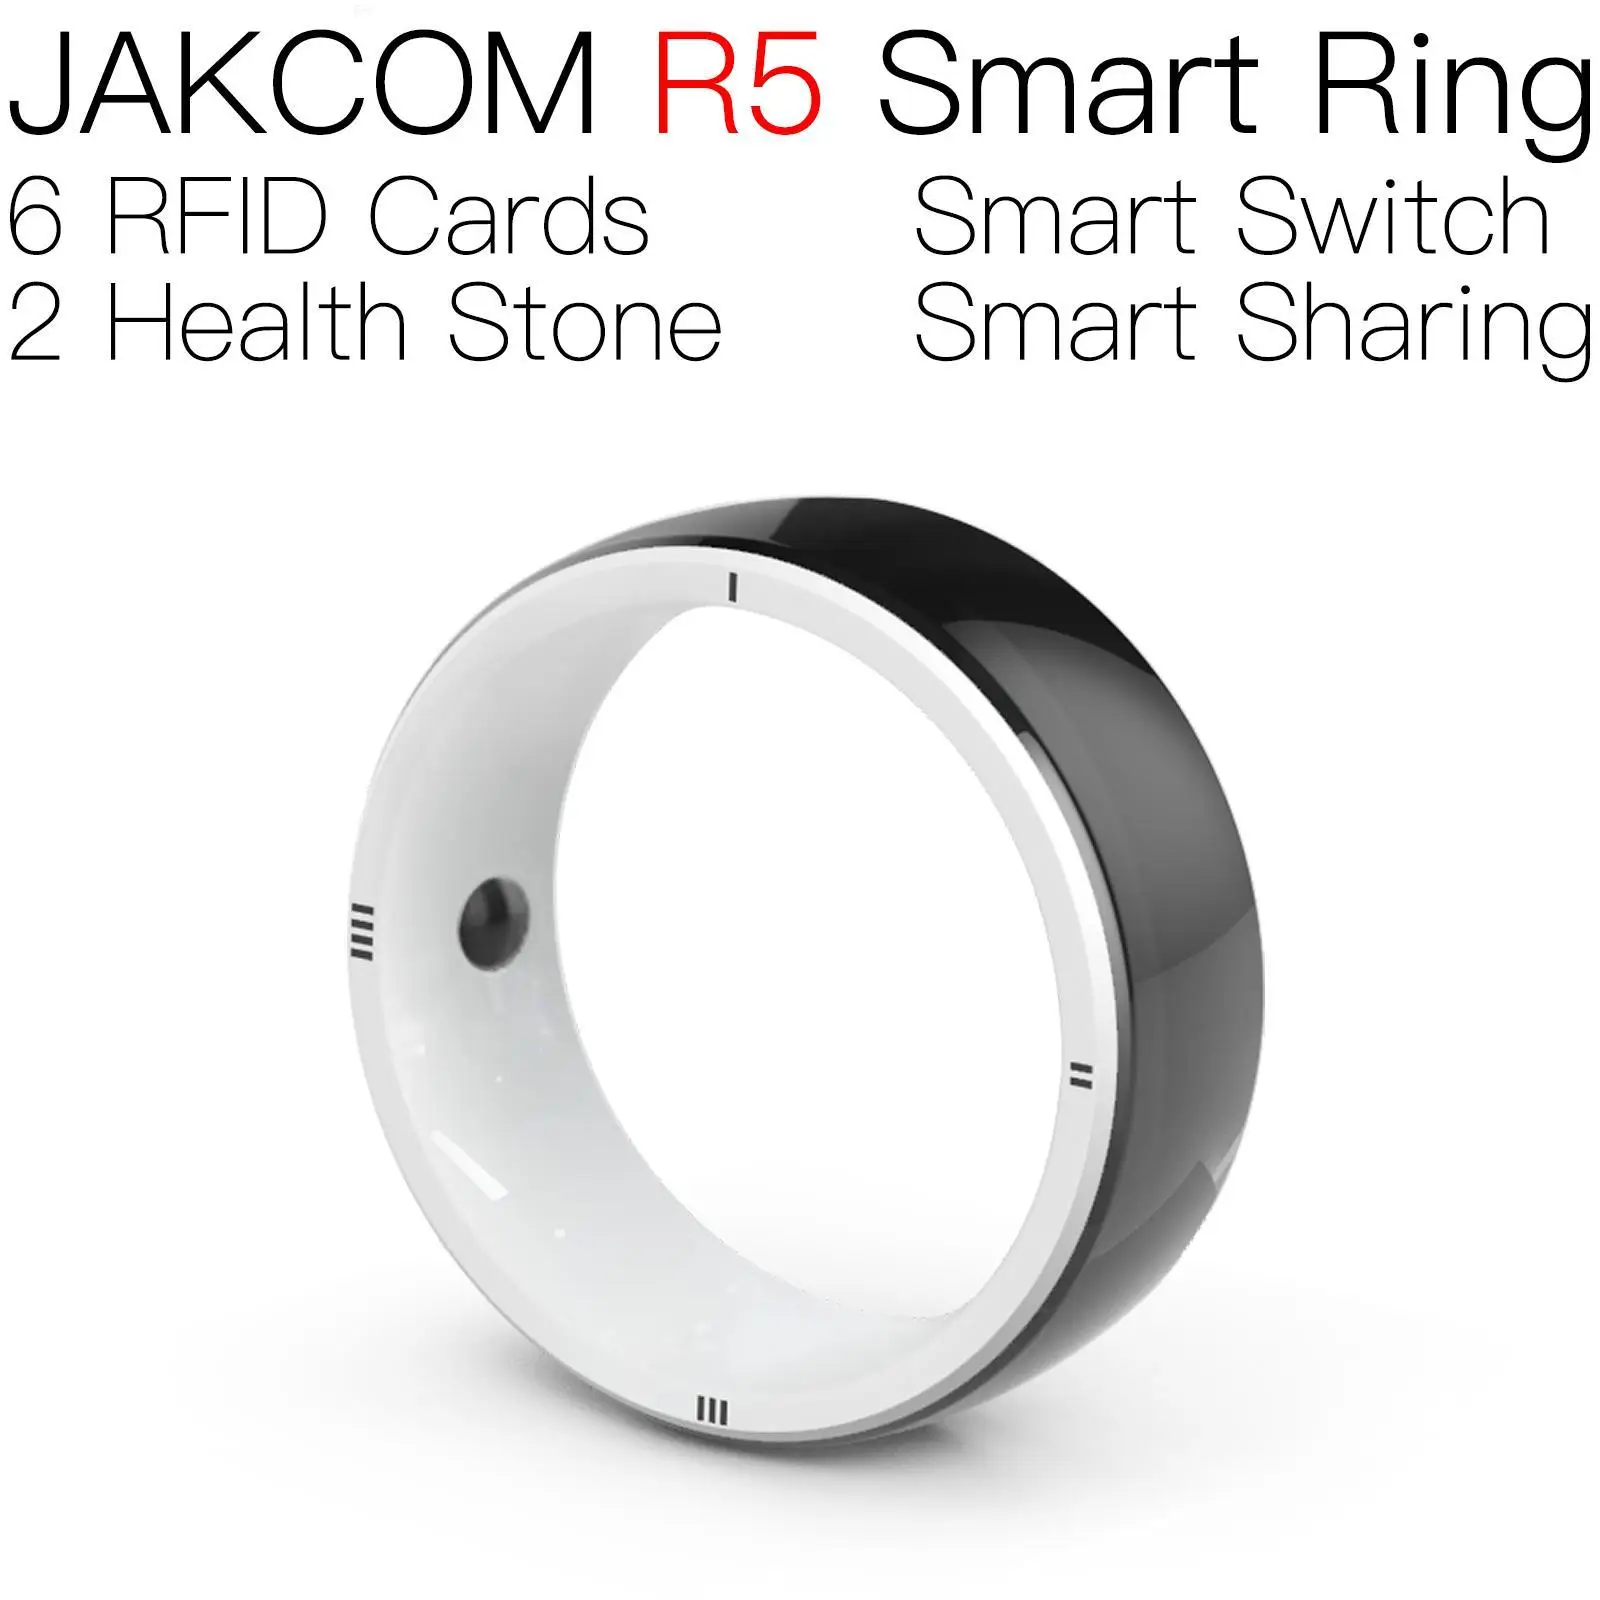 

JAKCOM R5 Smart Ring Nice than stickers congrats rfid sticker door 125 khz coil ic assortment touch memory key rw1990 ibutton